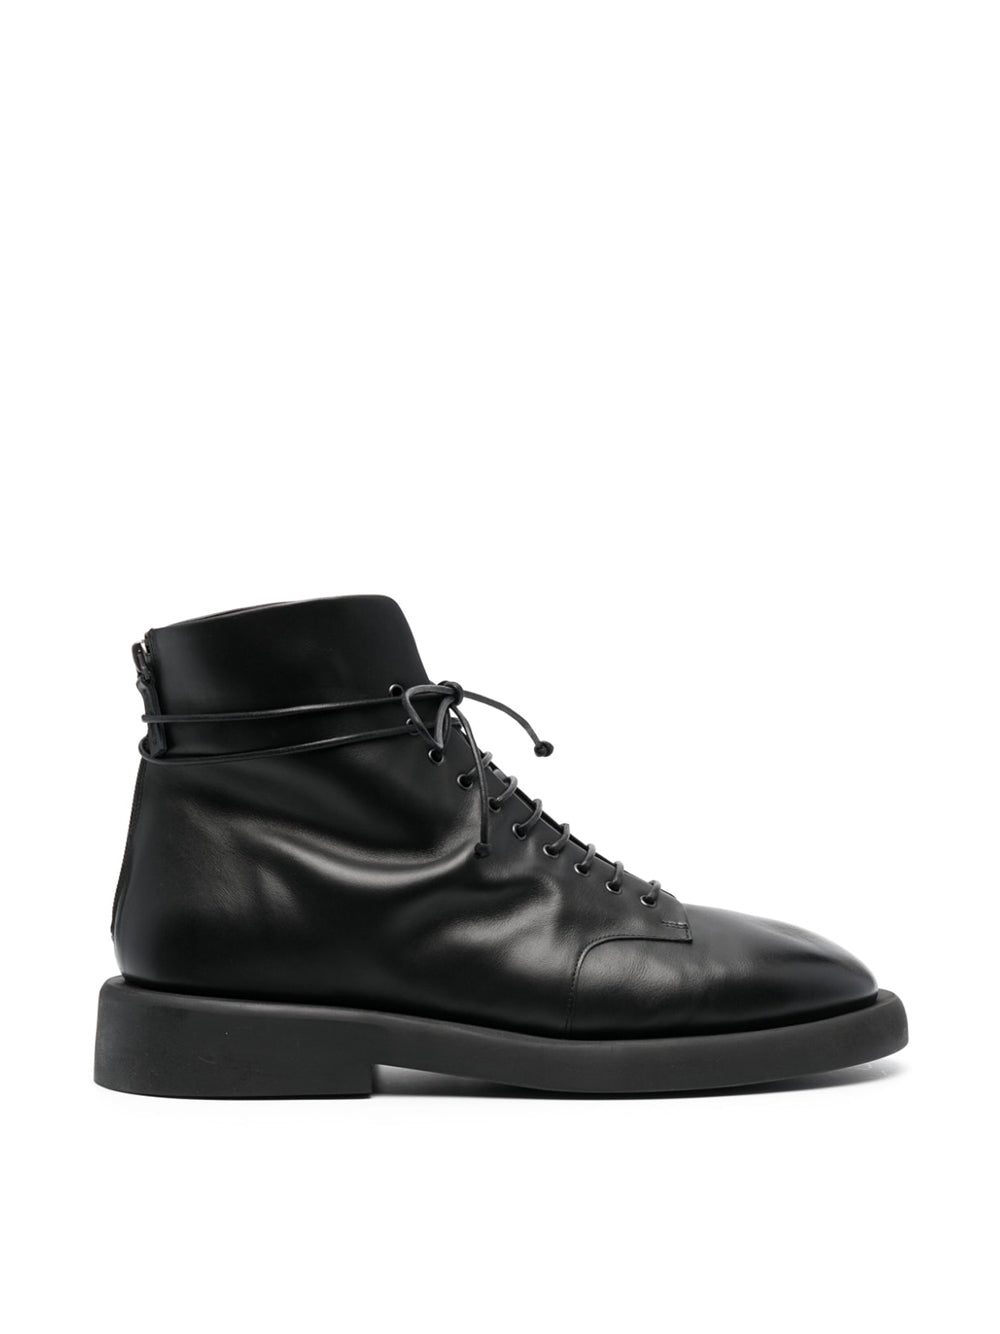 Black Polish Gommello Shoe